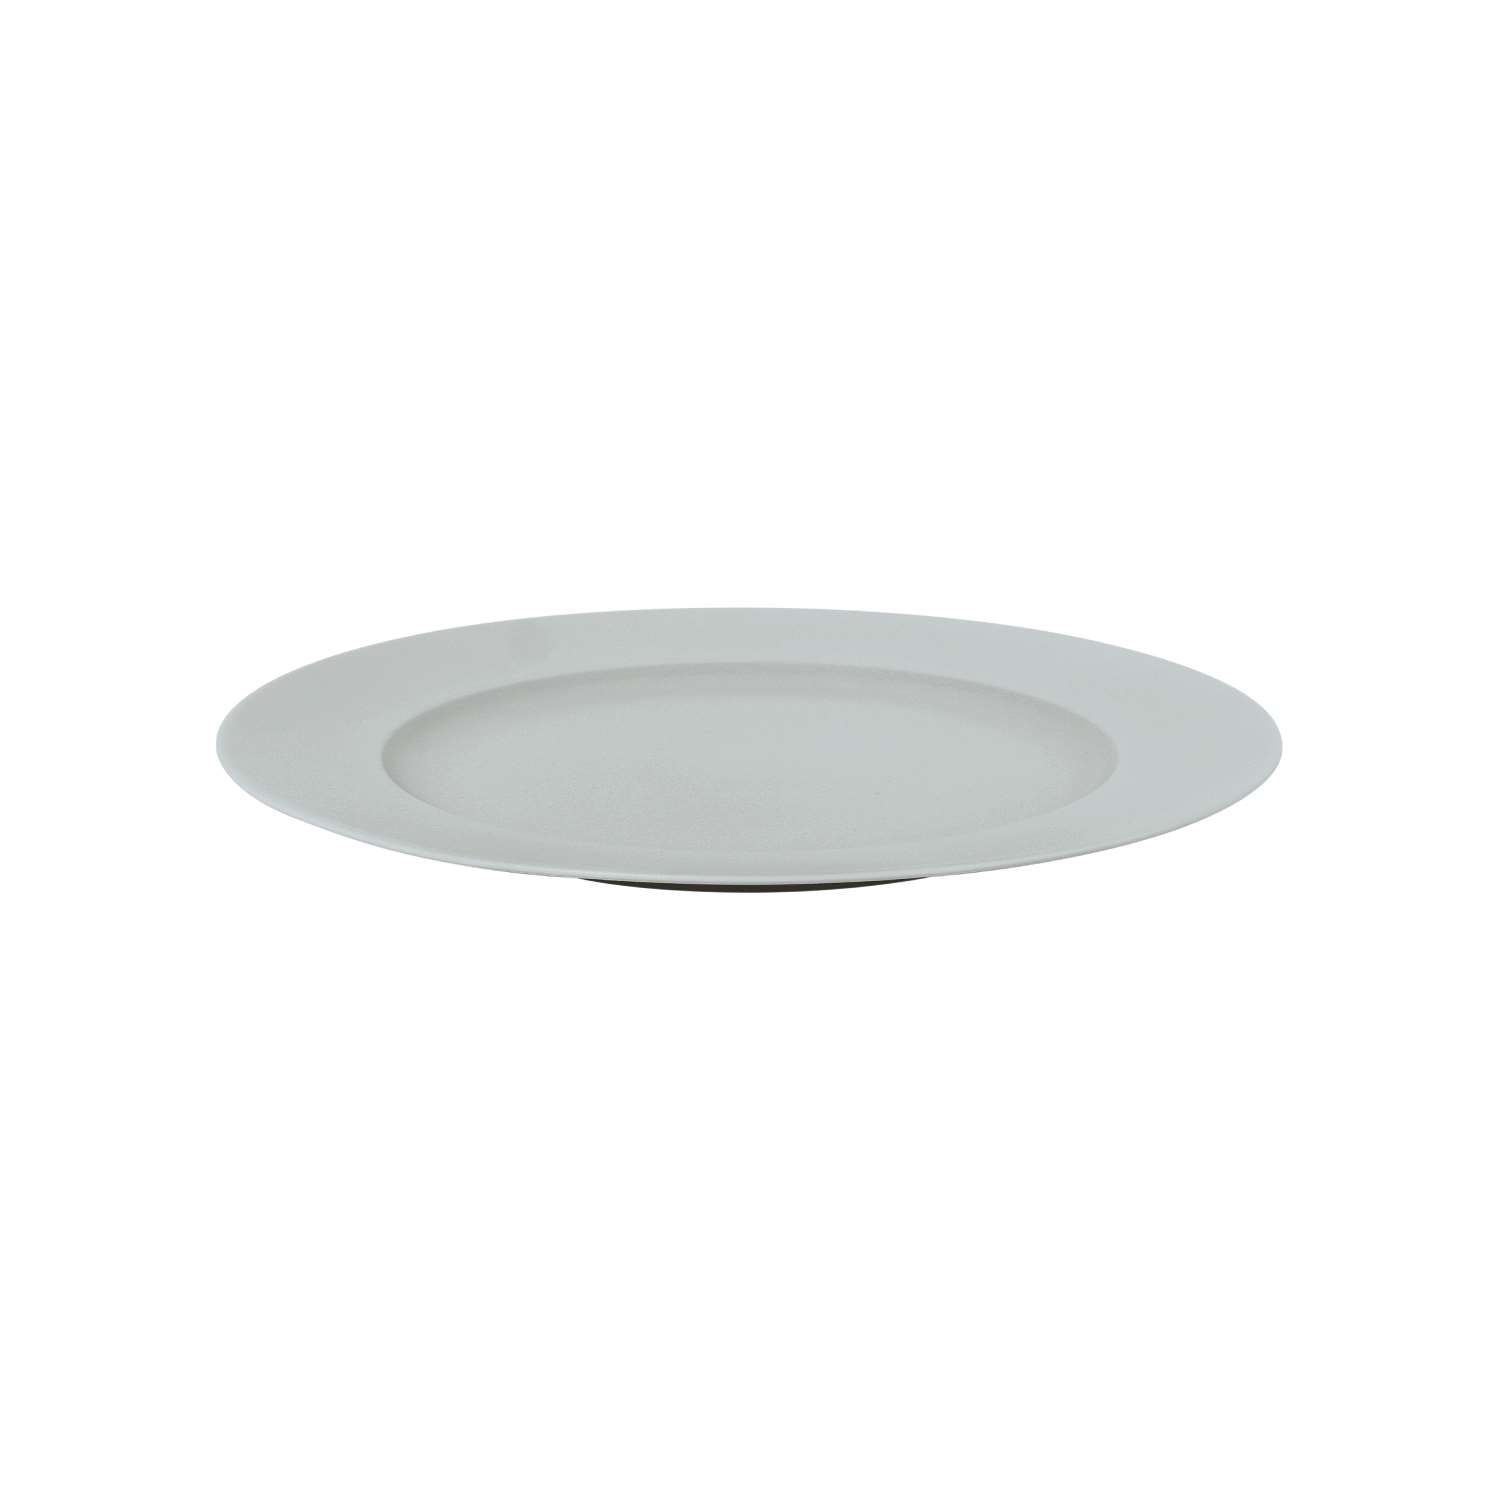 Baralee Light Grey Flat Plate 31 Cm